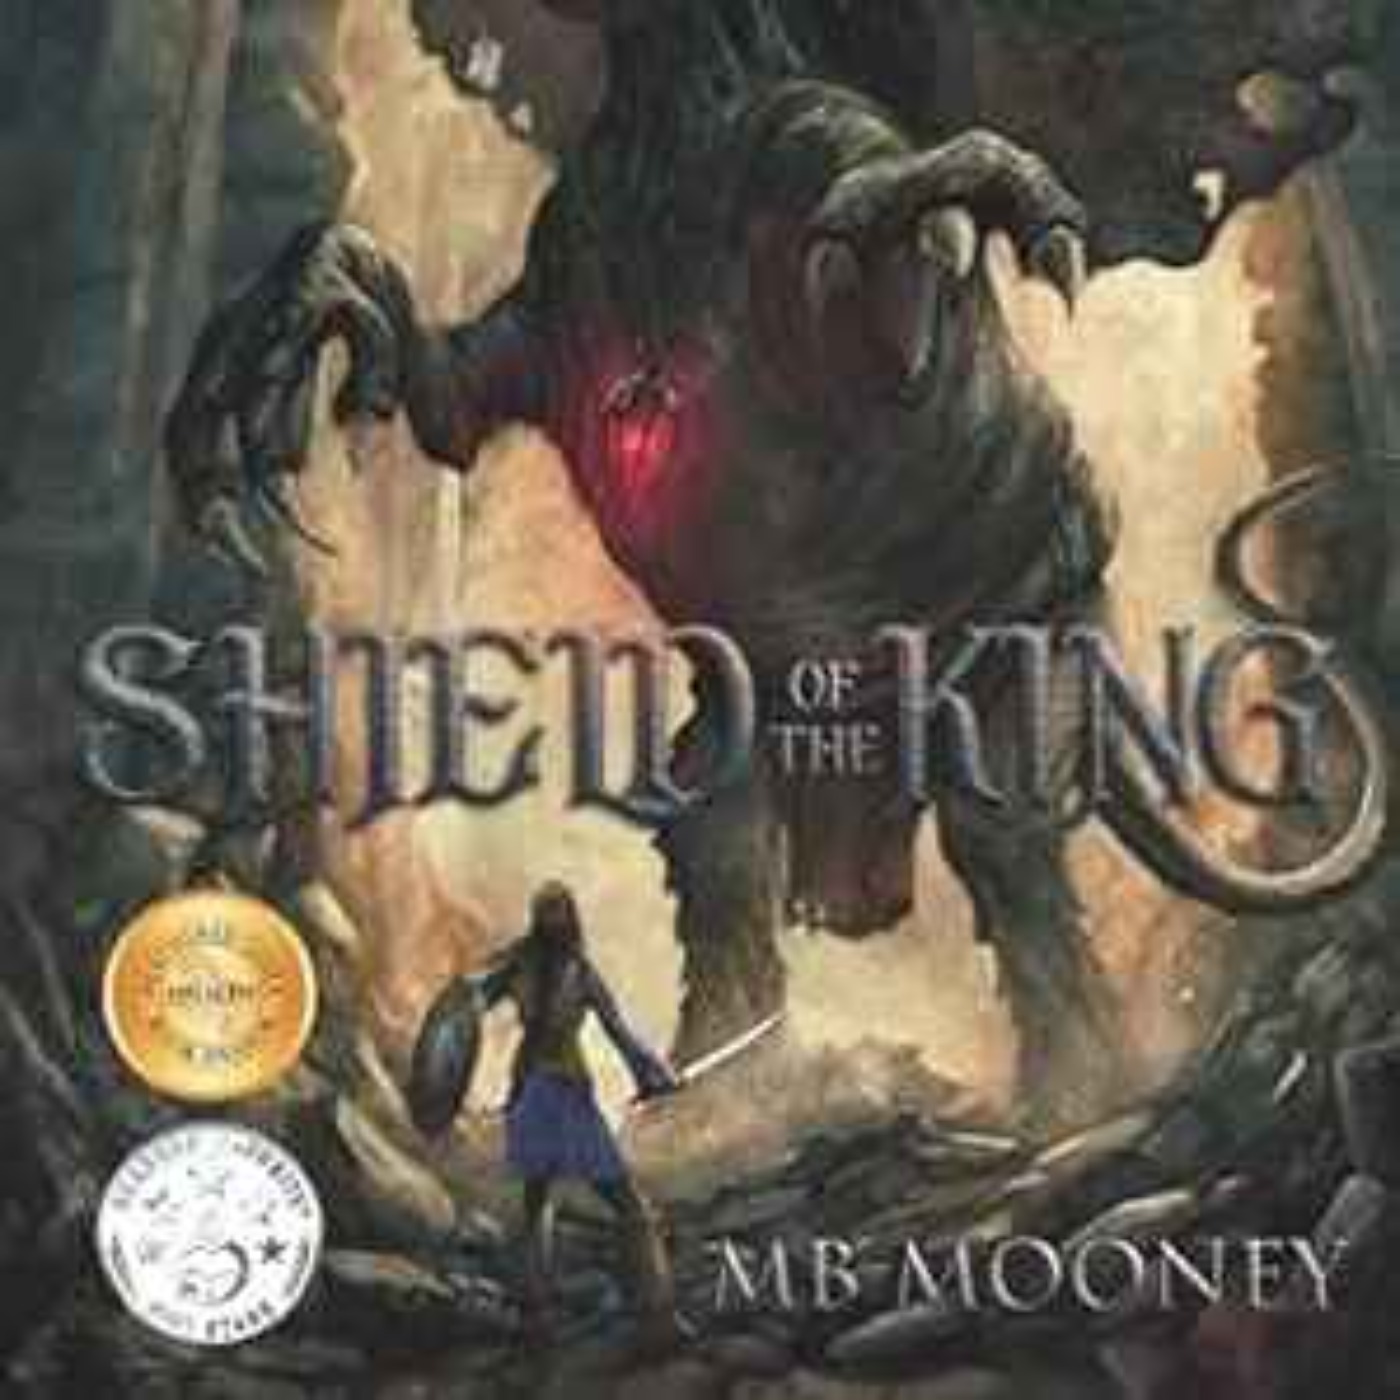 MB Mooney - Shield of the King: Elowen Book 1